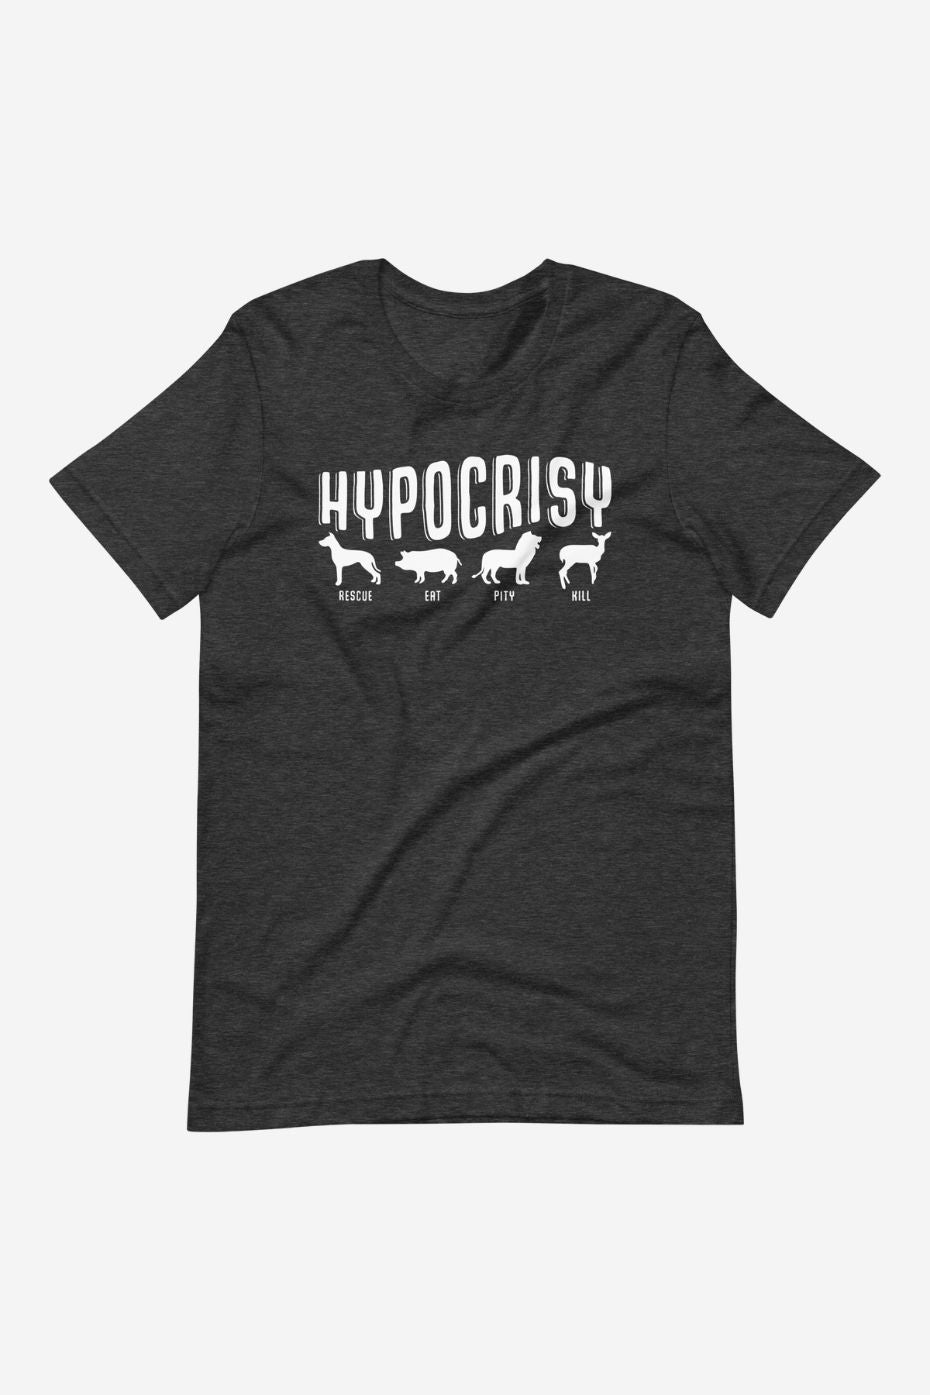 Hypocrisy - Unisex vegan t-shirt